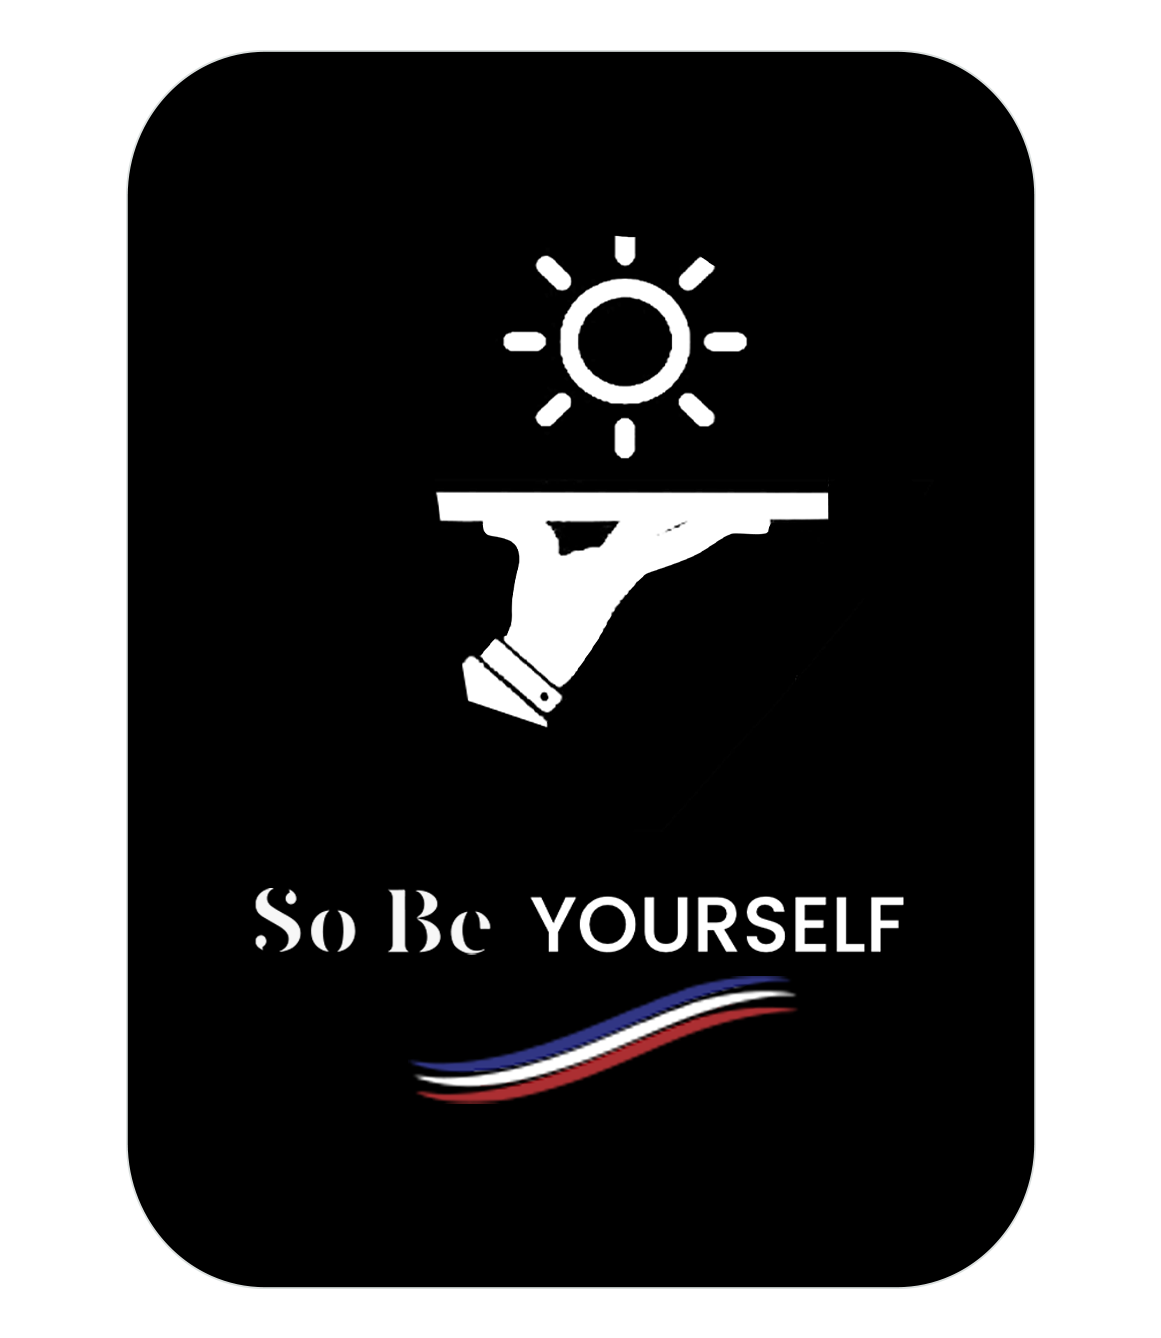 Sobe Yourself logo